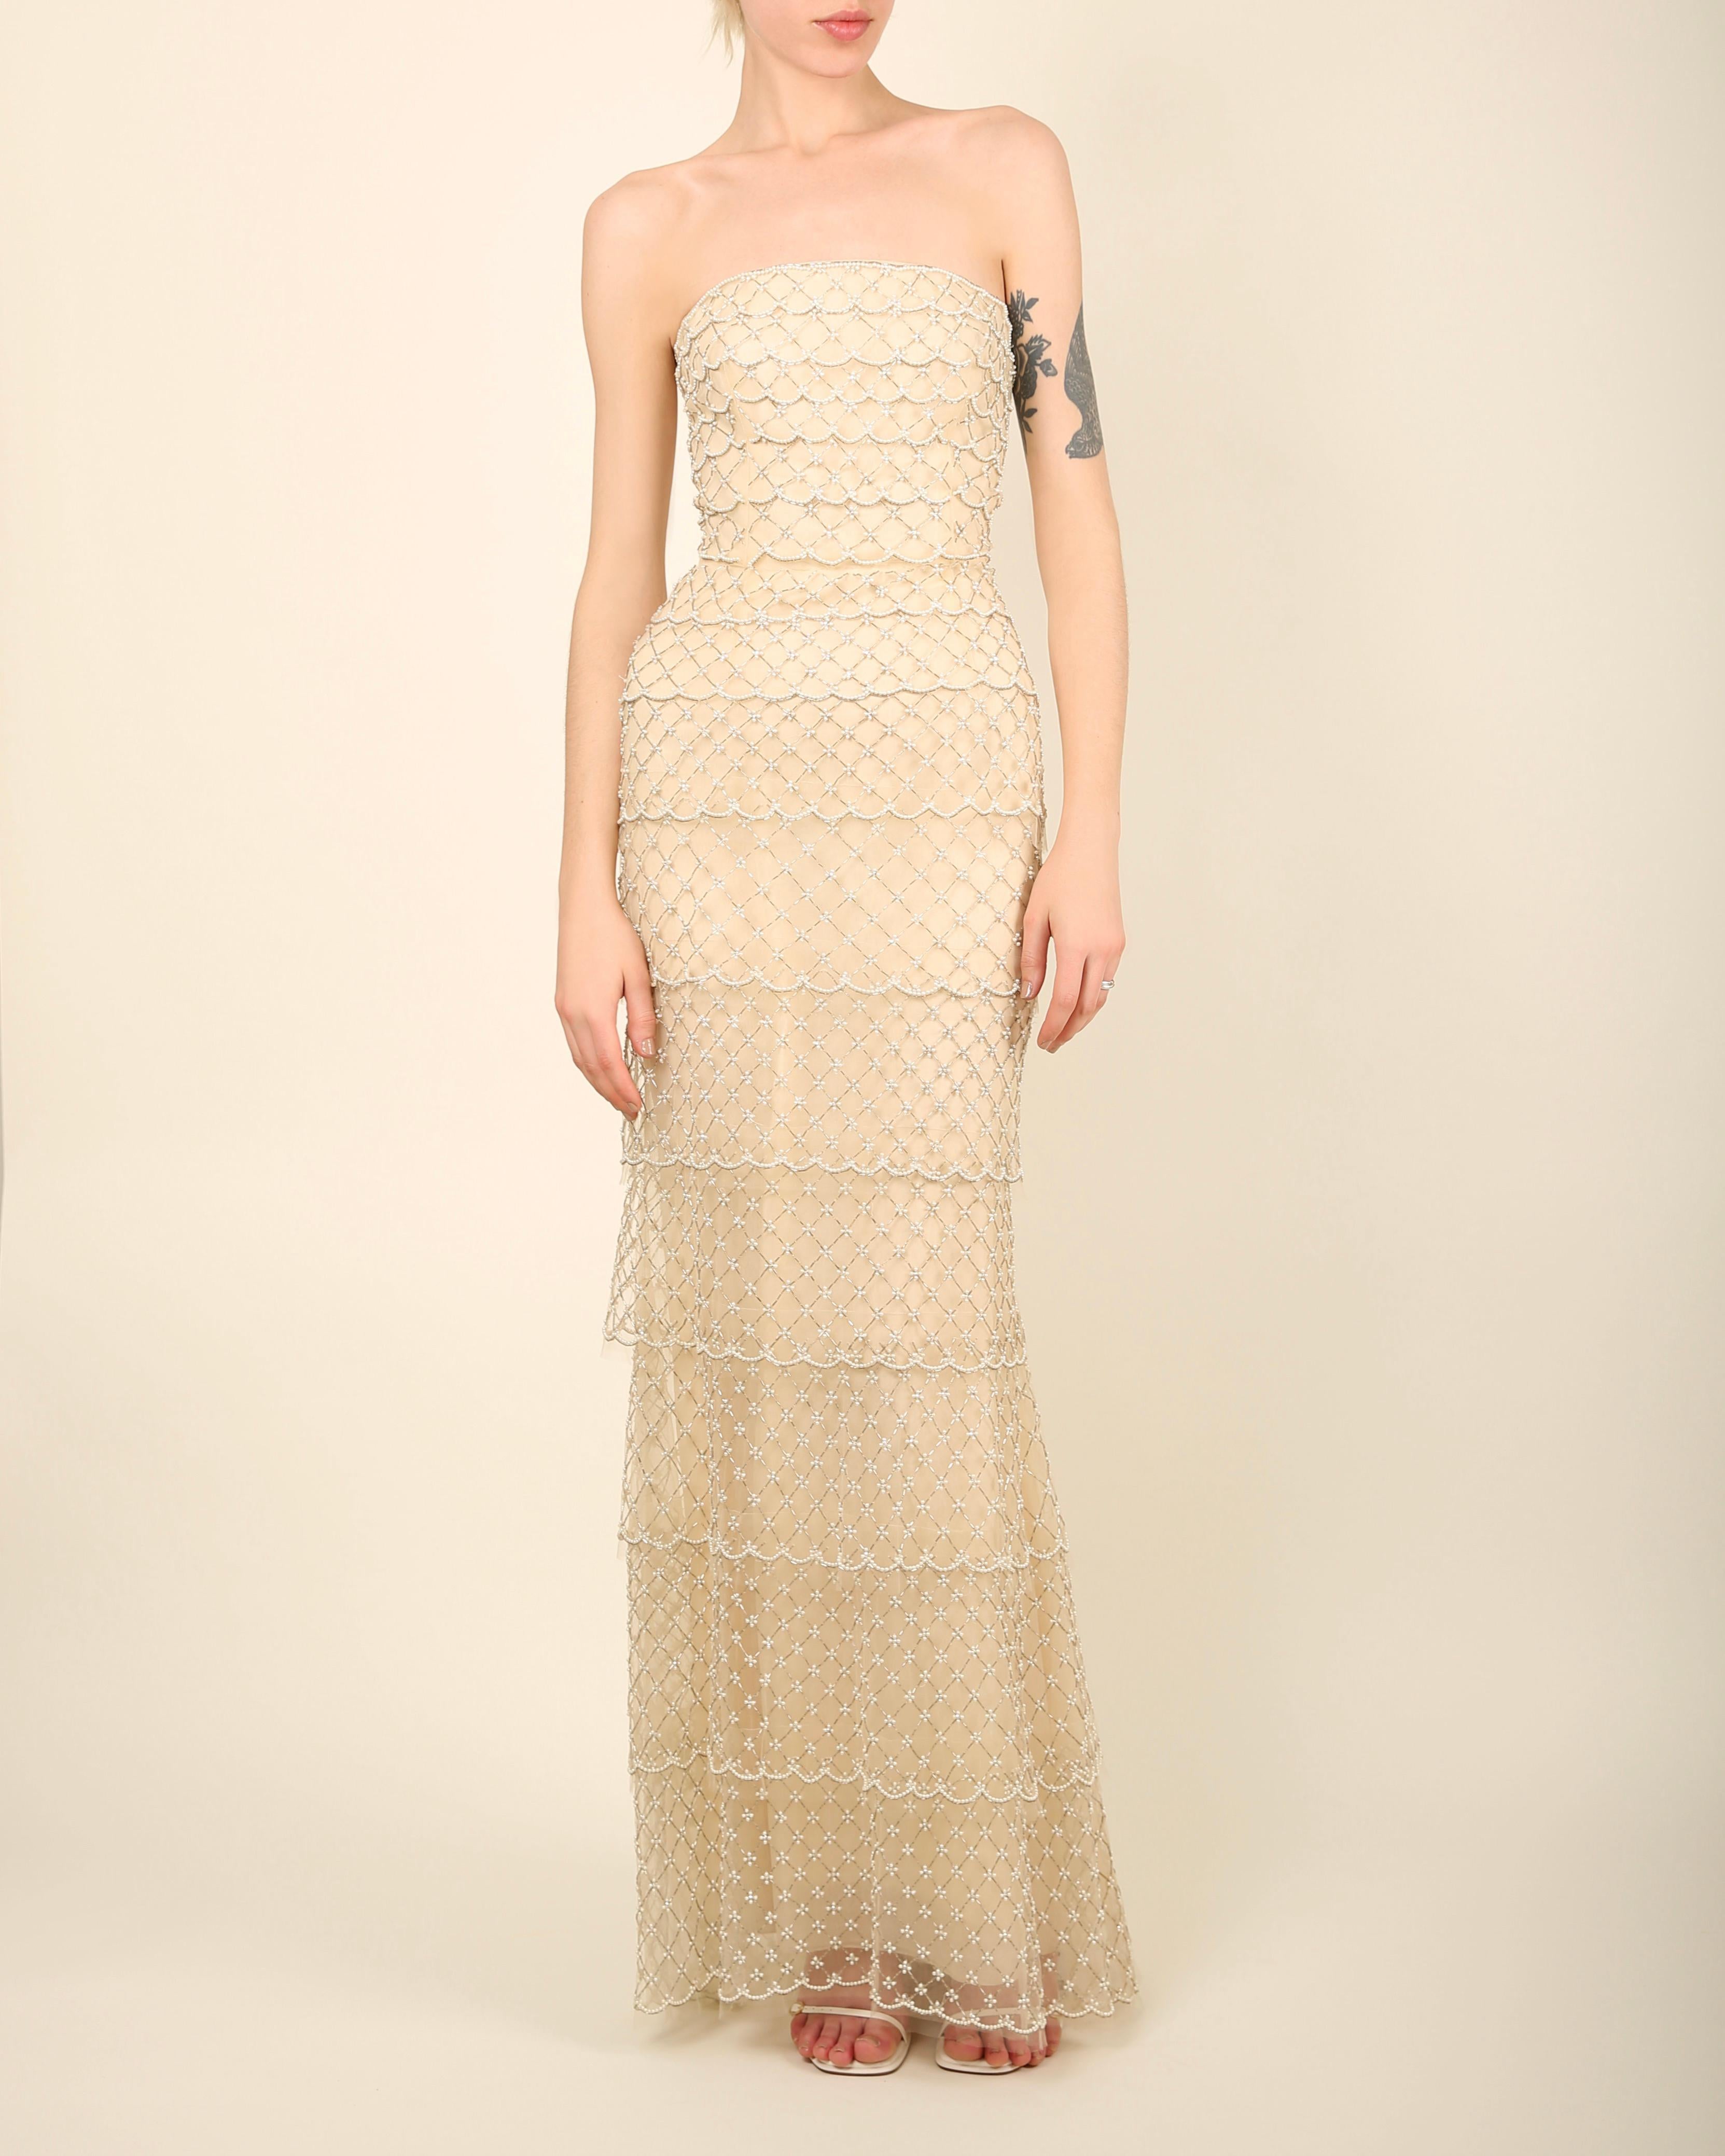 Women's Oscar de la Renta S/S 2014 strapless tiered sheer mesh pearl wedding dress gown